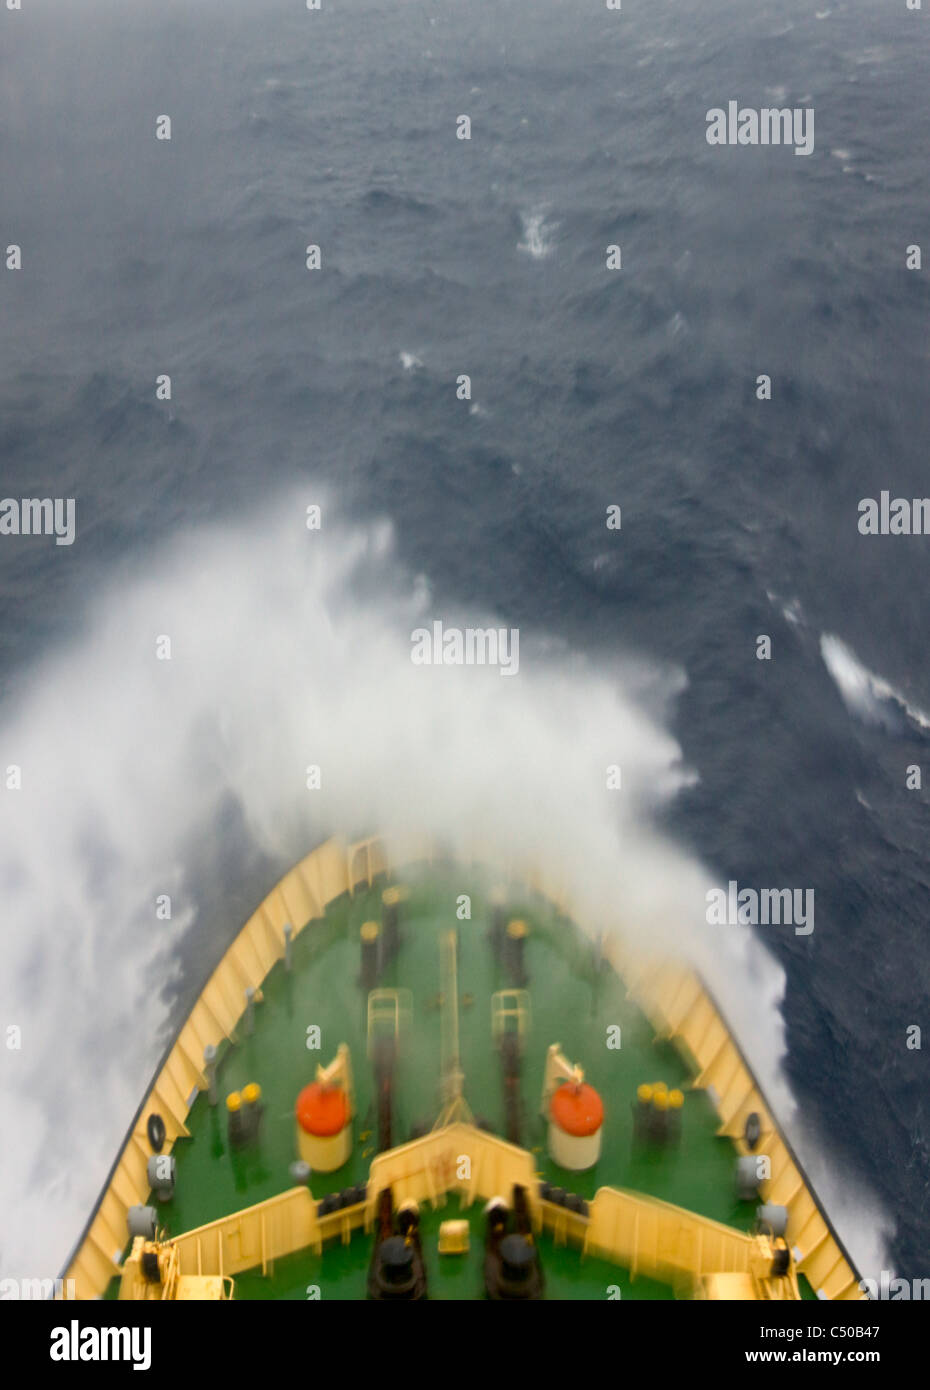 Ship navigating in the ocean through rough water, Antarctica Stock Photo